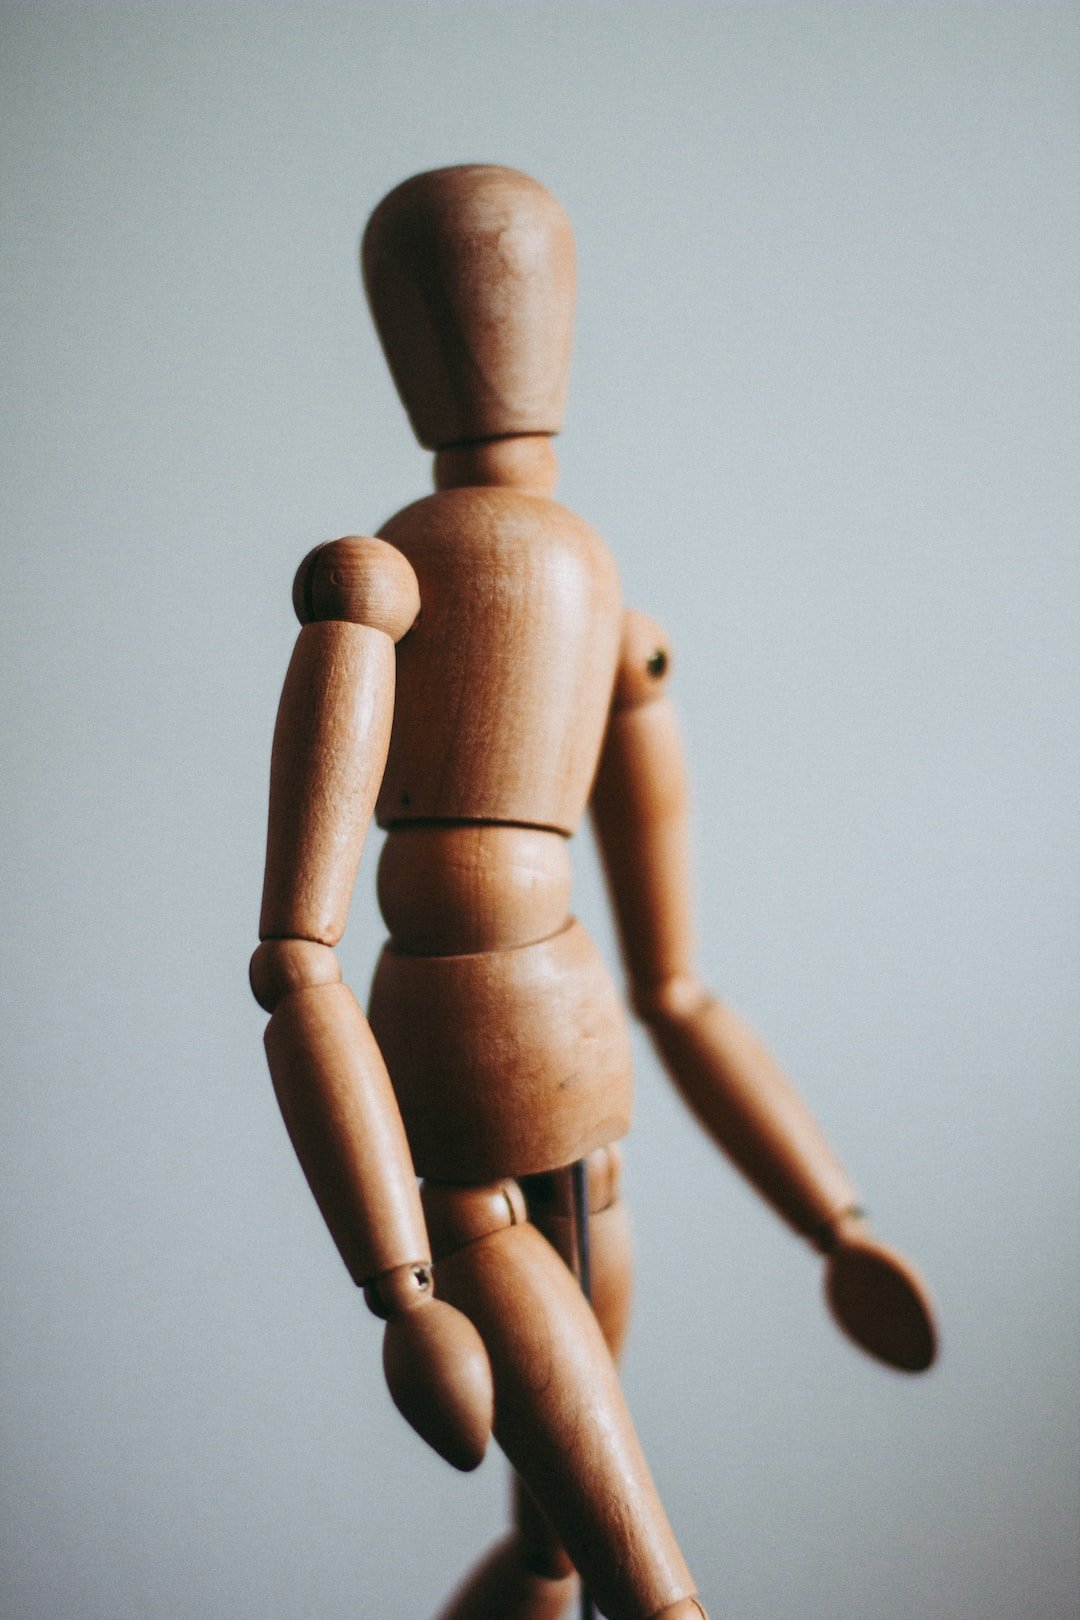 wooden figure in motion